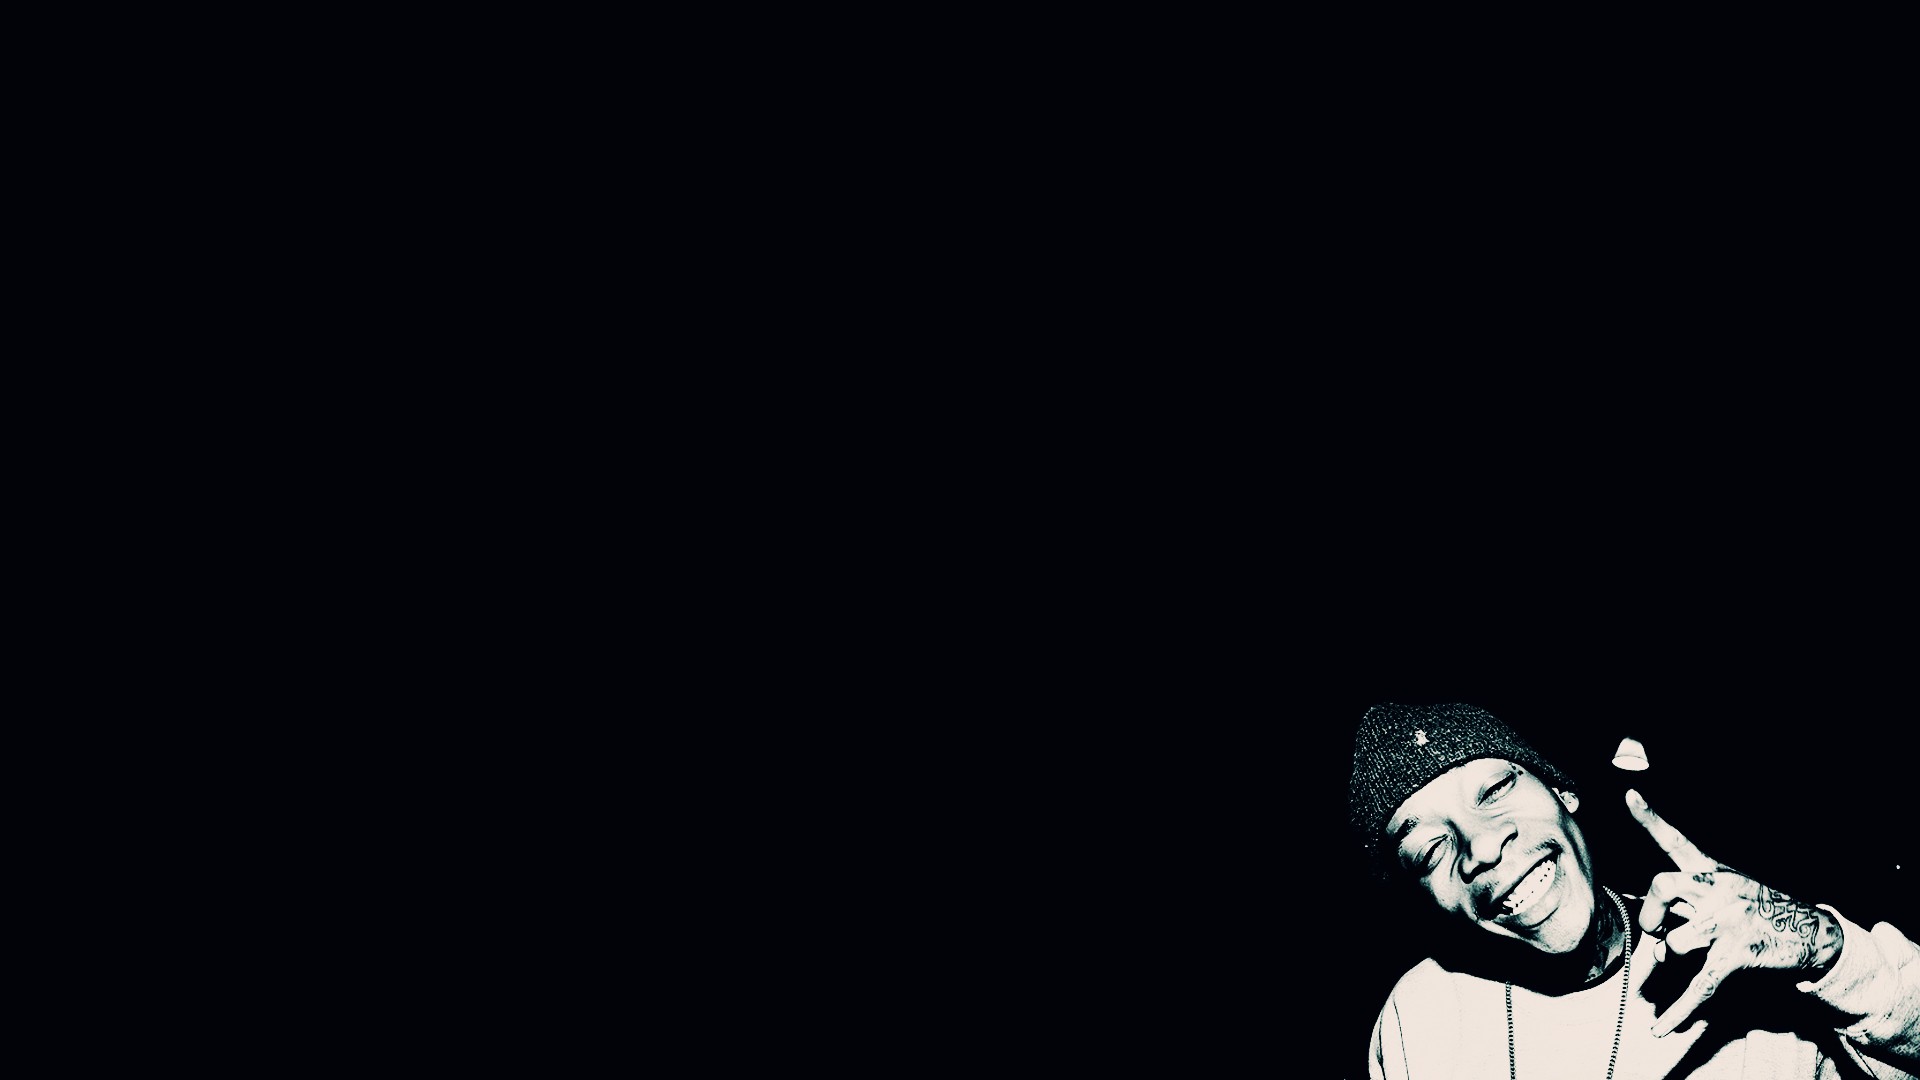 Wiz Khalifa Background